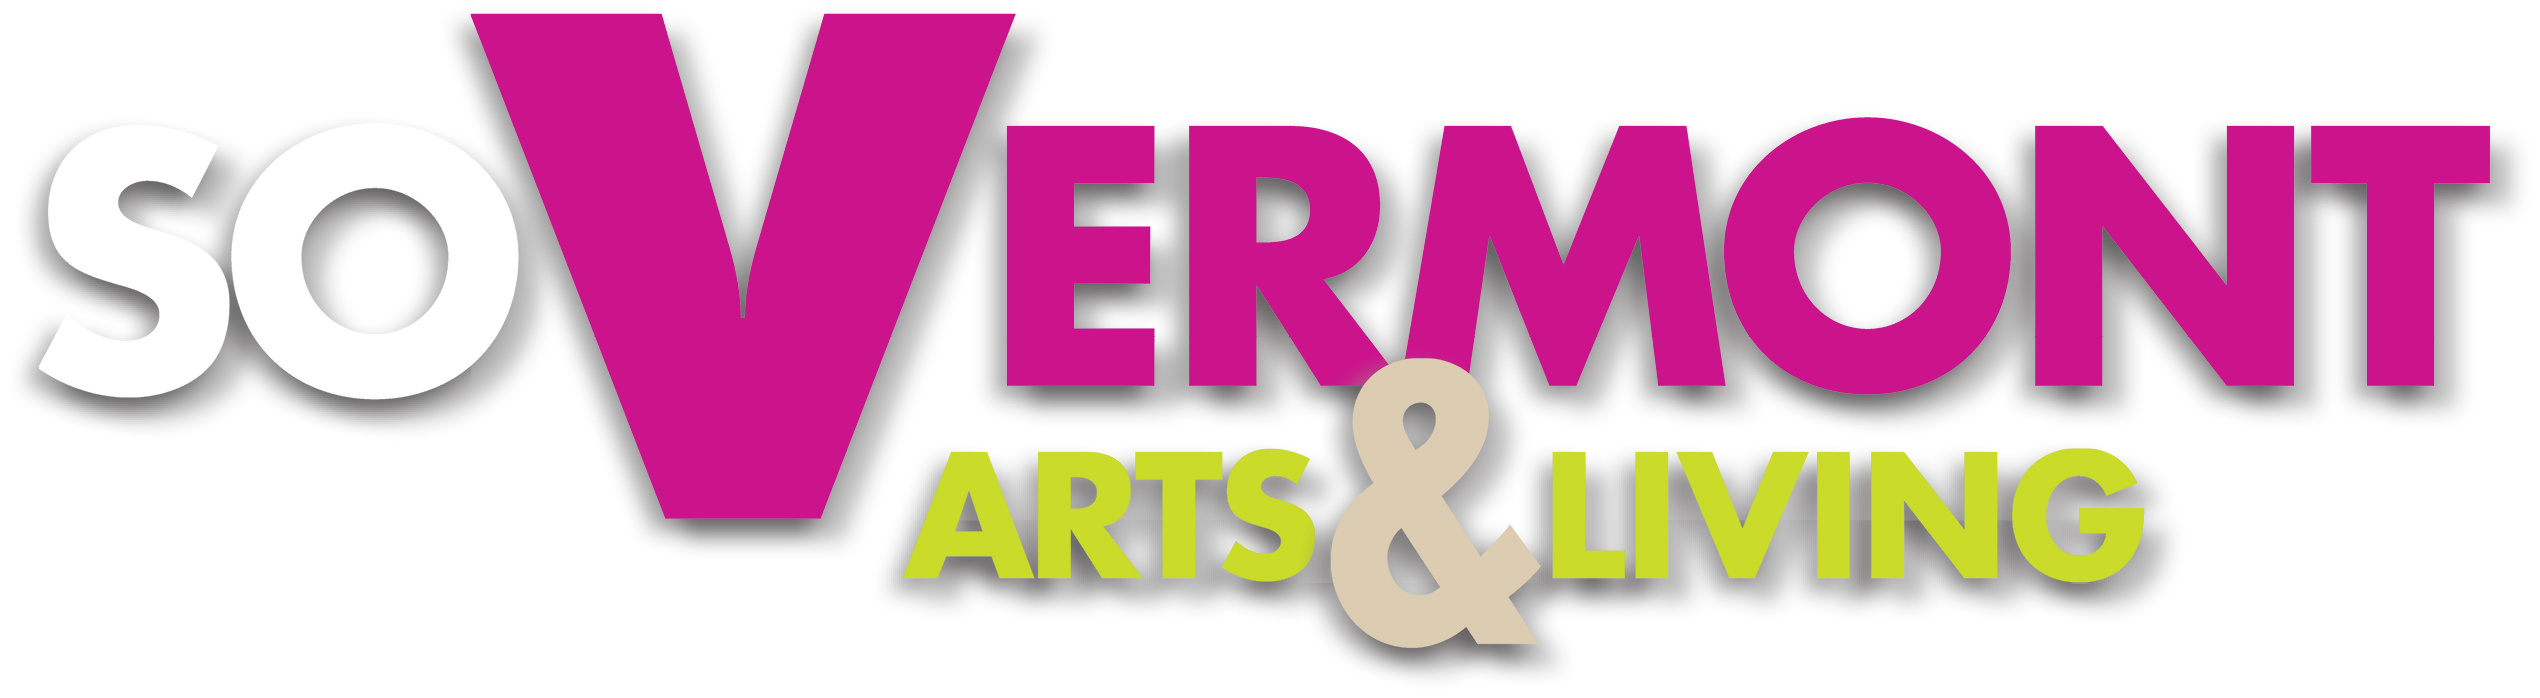 Vermont Arts & Living